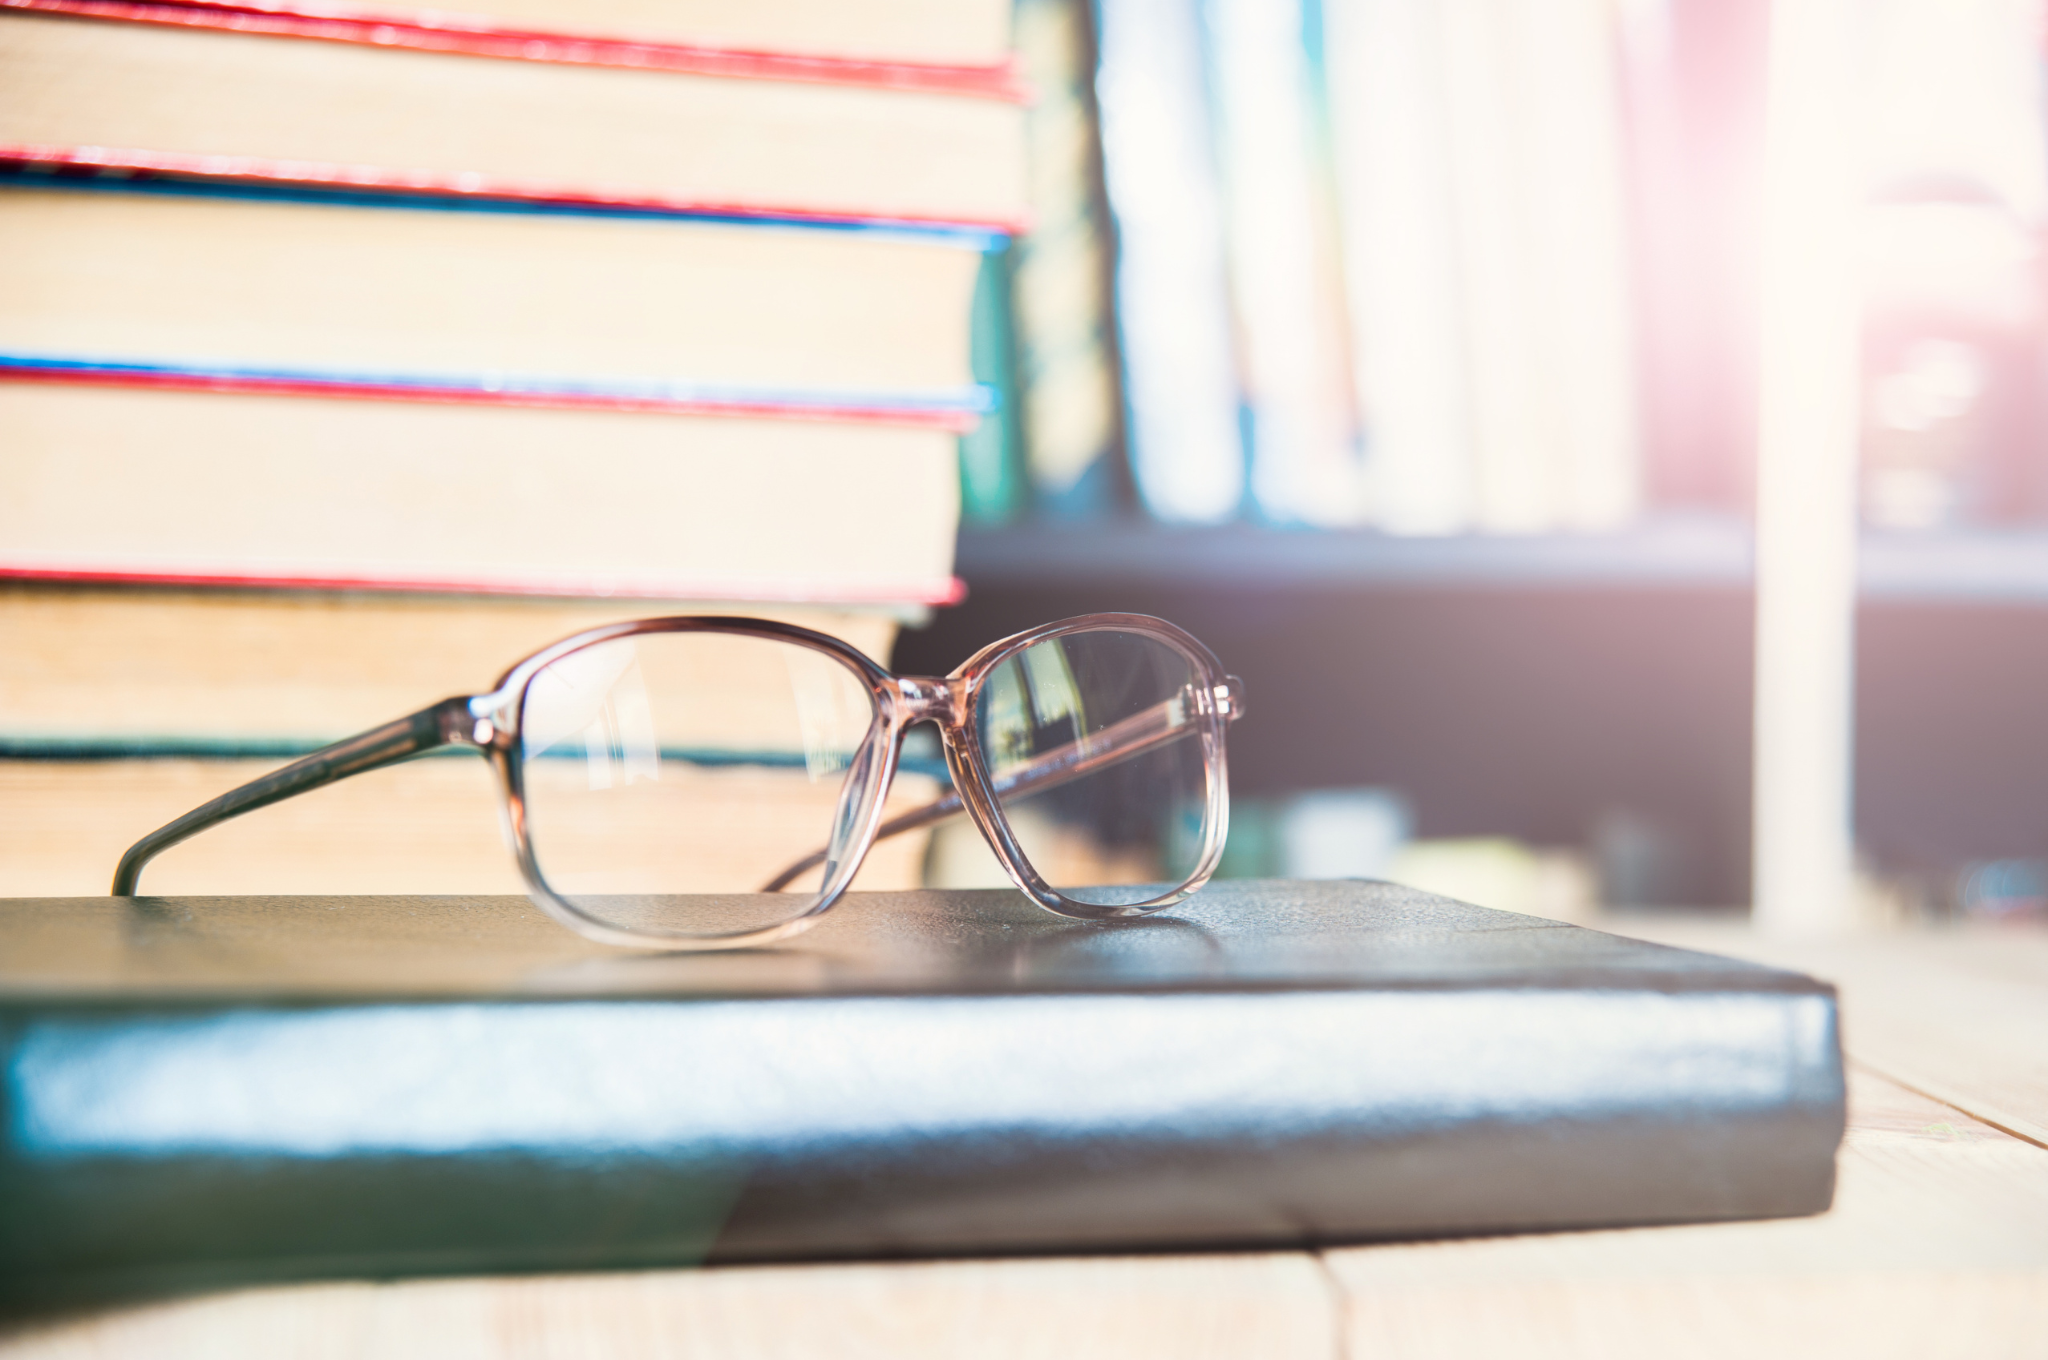 okulary leżące na książce, w tle sterta książek